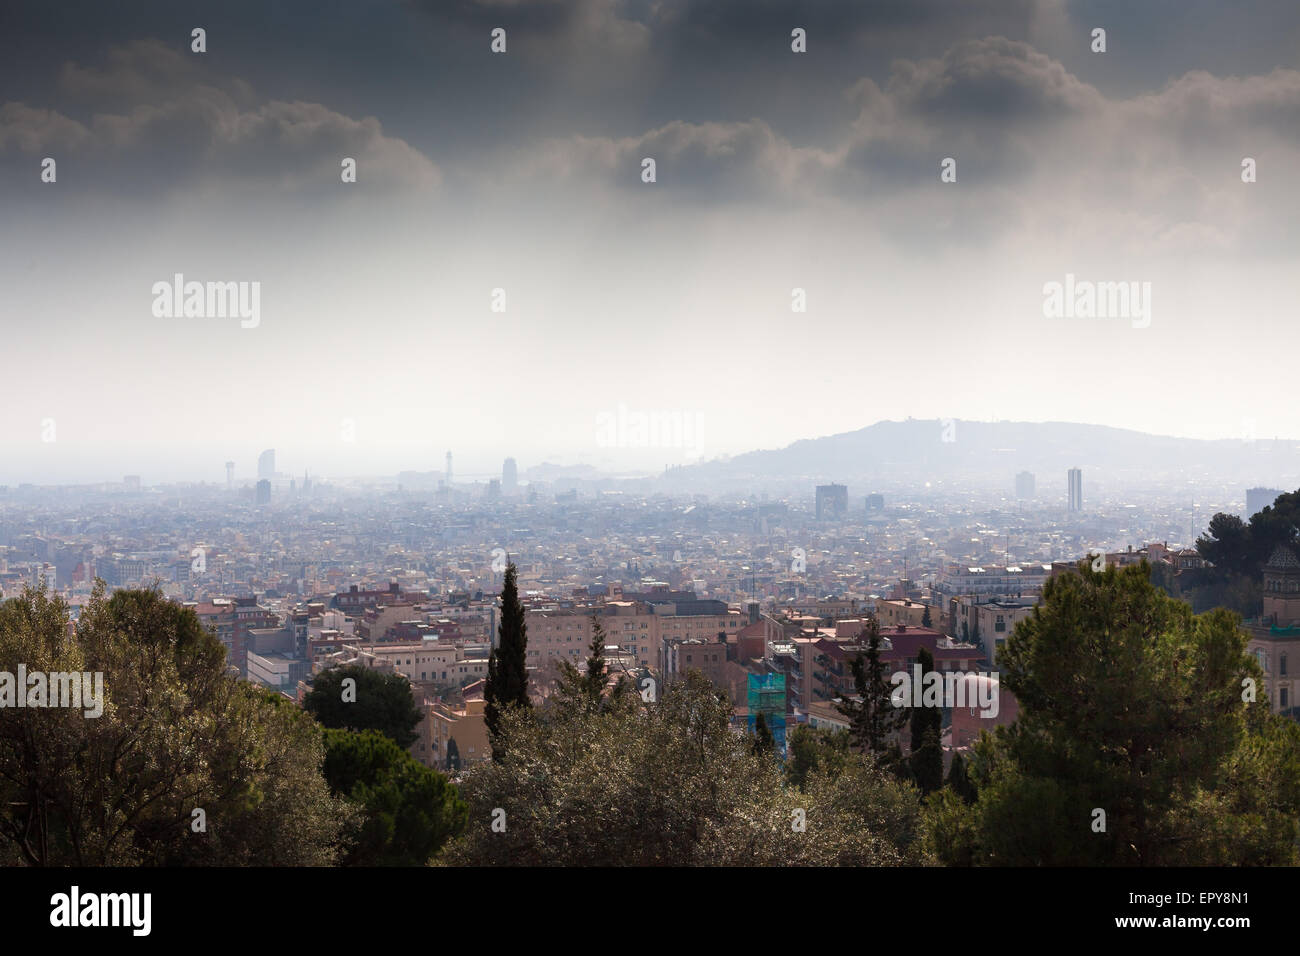 Stadt betrachtet bei bewölktem Wetter, Barcelona, Katalonien, Spaincolor Bild, Canon 5DmkII durch Park Güell. Stockfoto